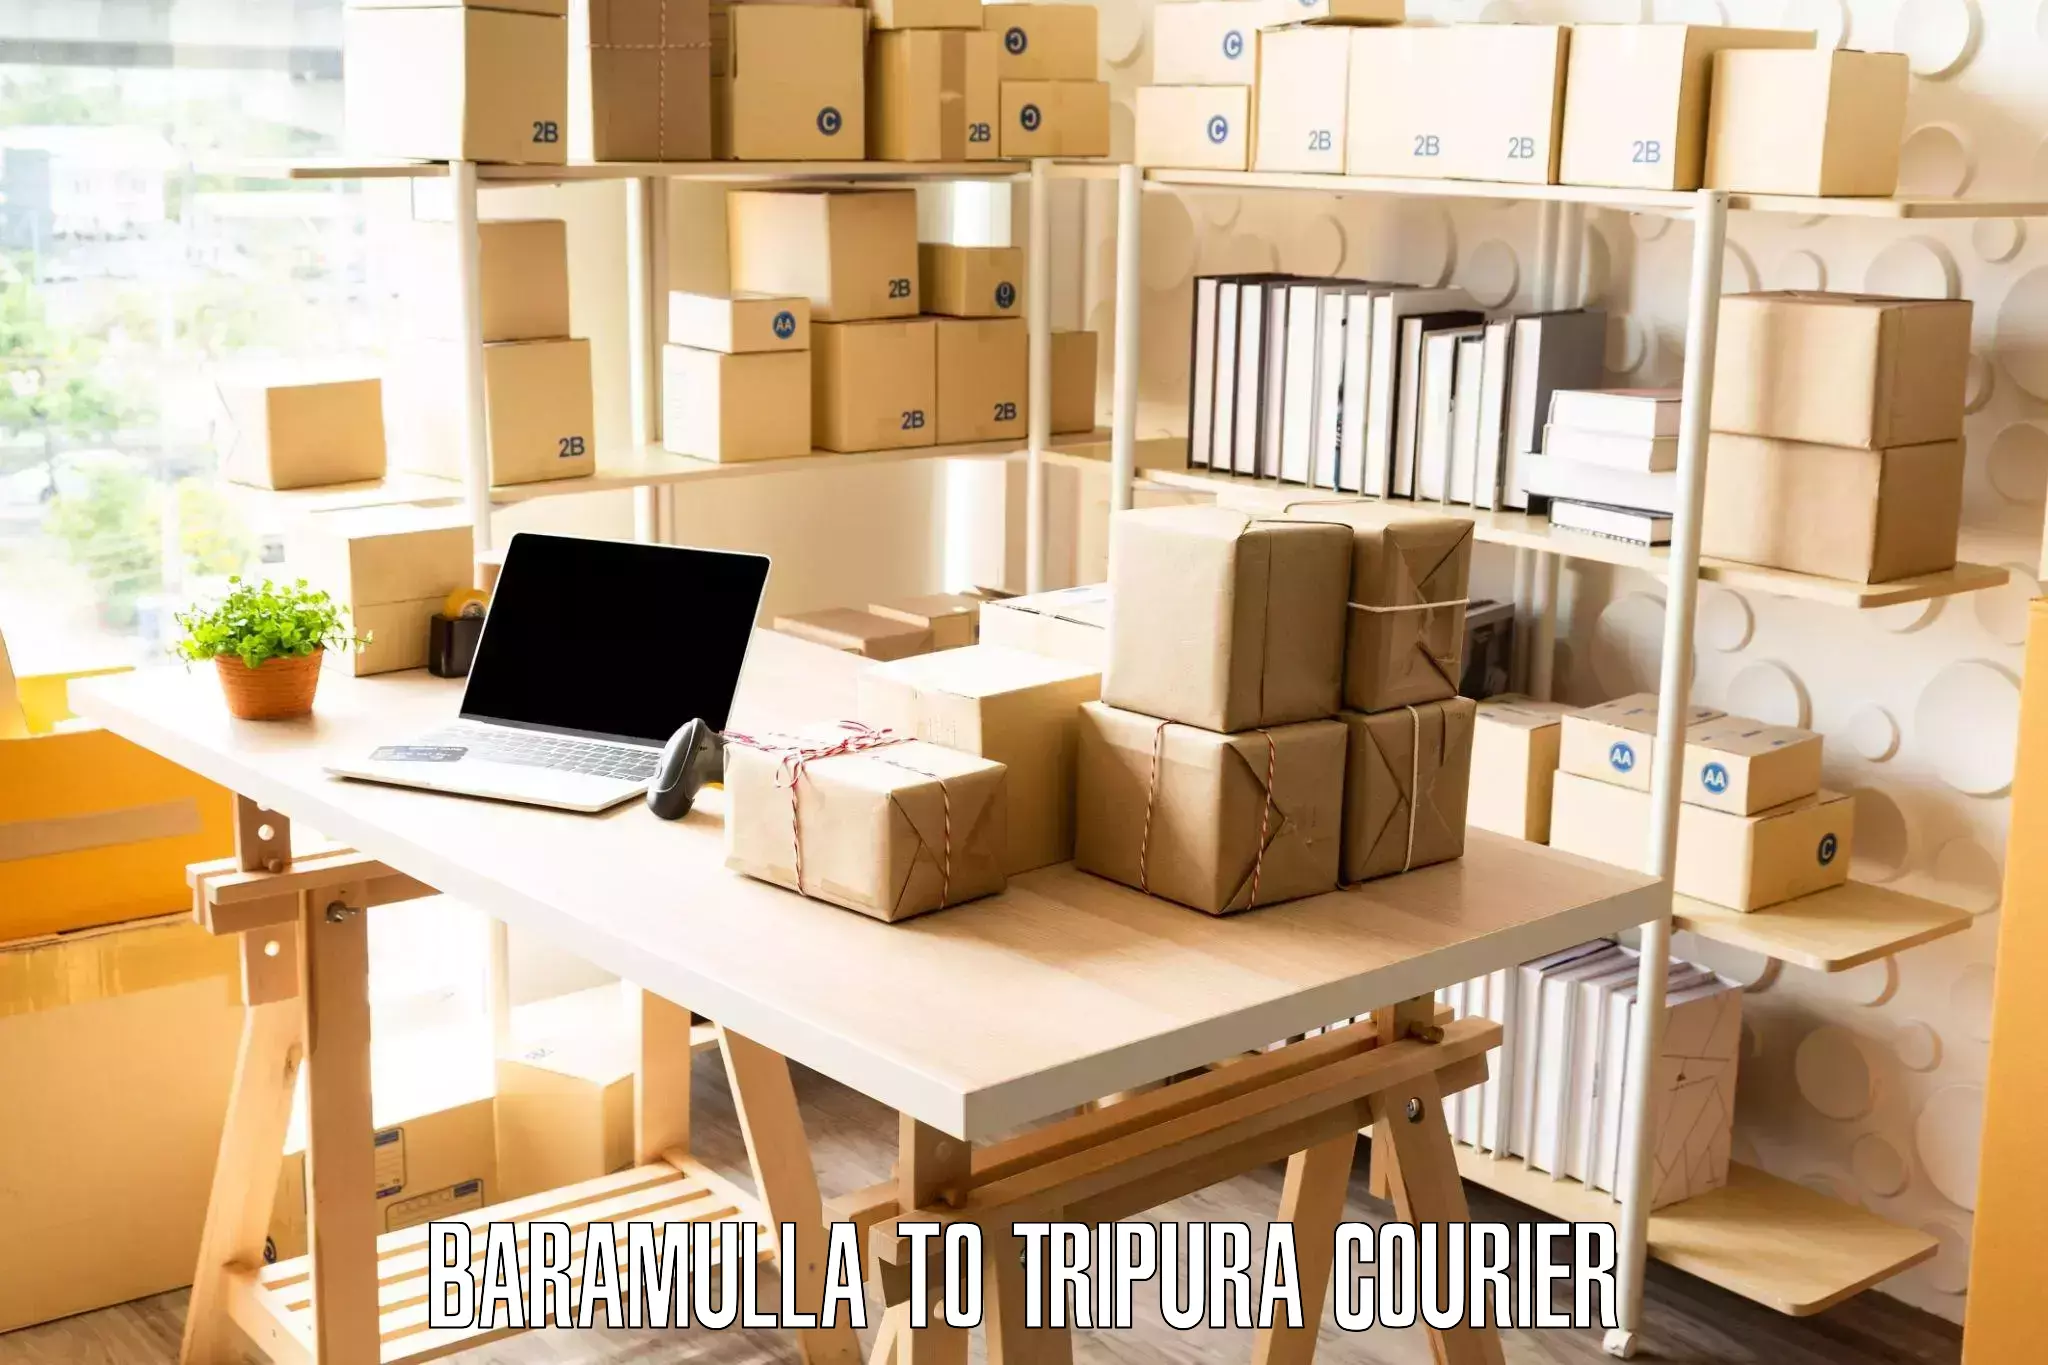 Professional moving company Baramulla to Tripura